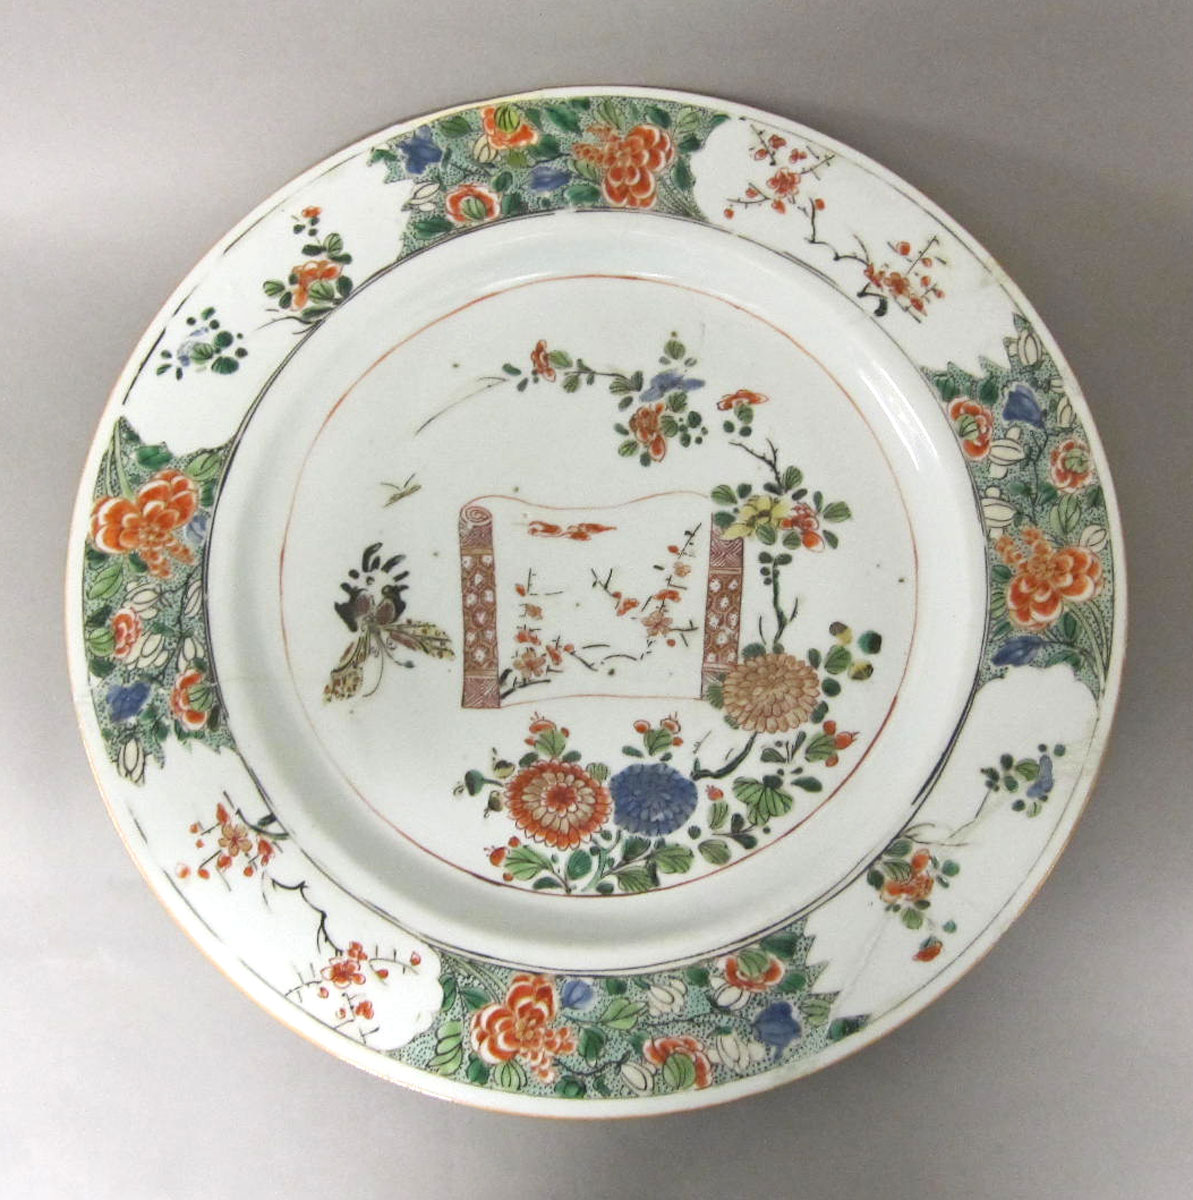 1956.0017.005 Porcelain plate